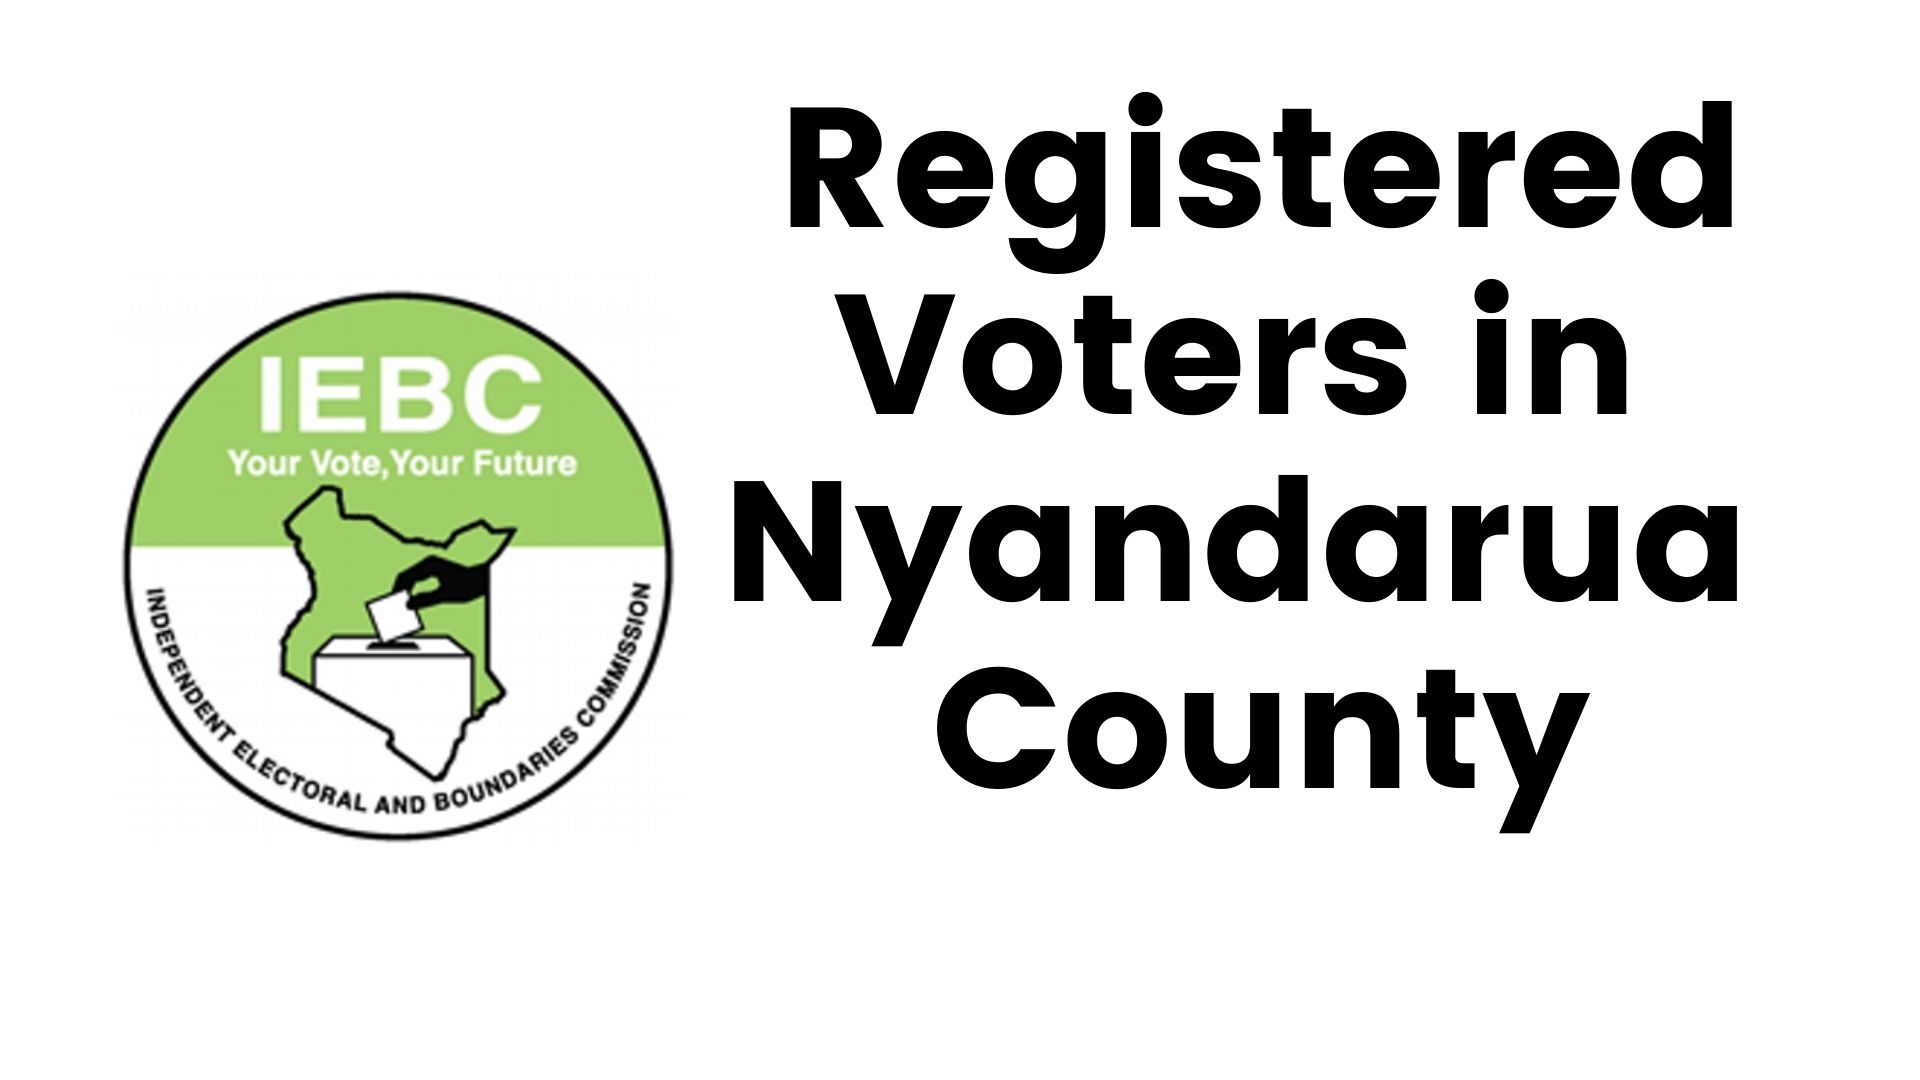 IEBC Nyandarua County Registered Voters (Constituency, Wards)